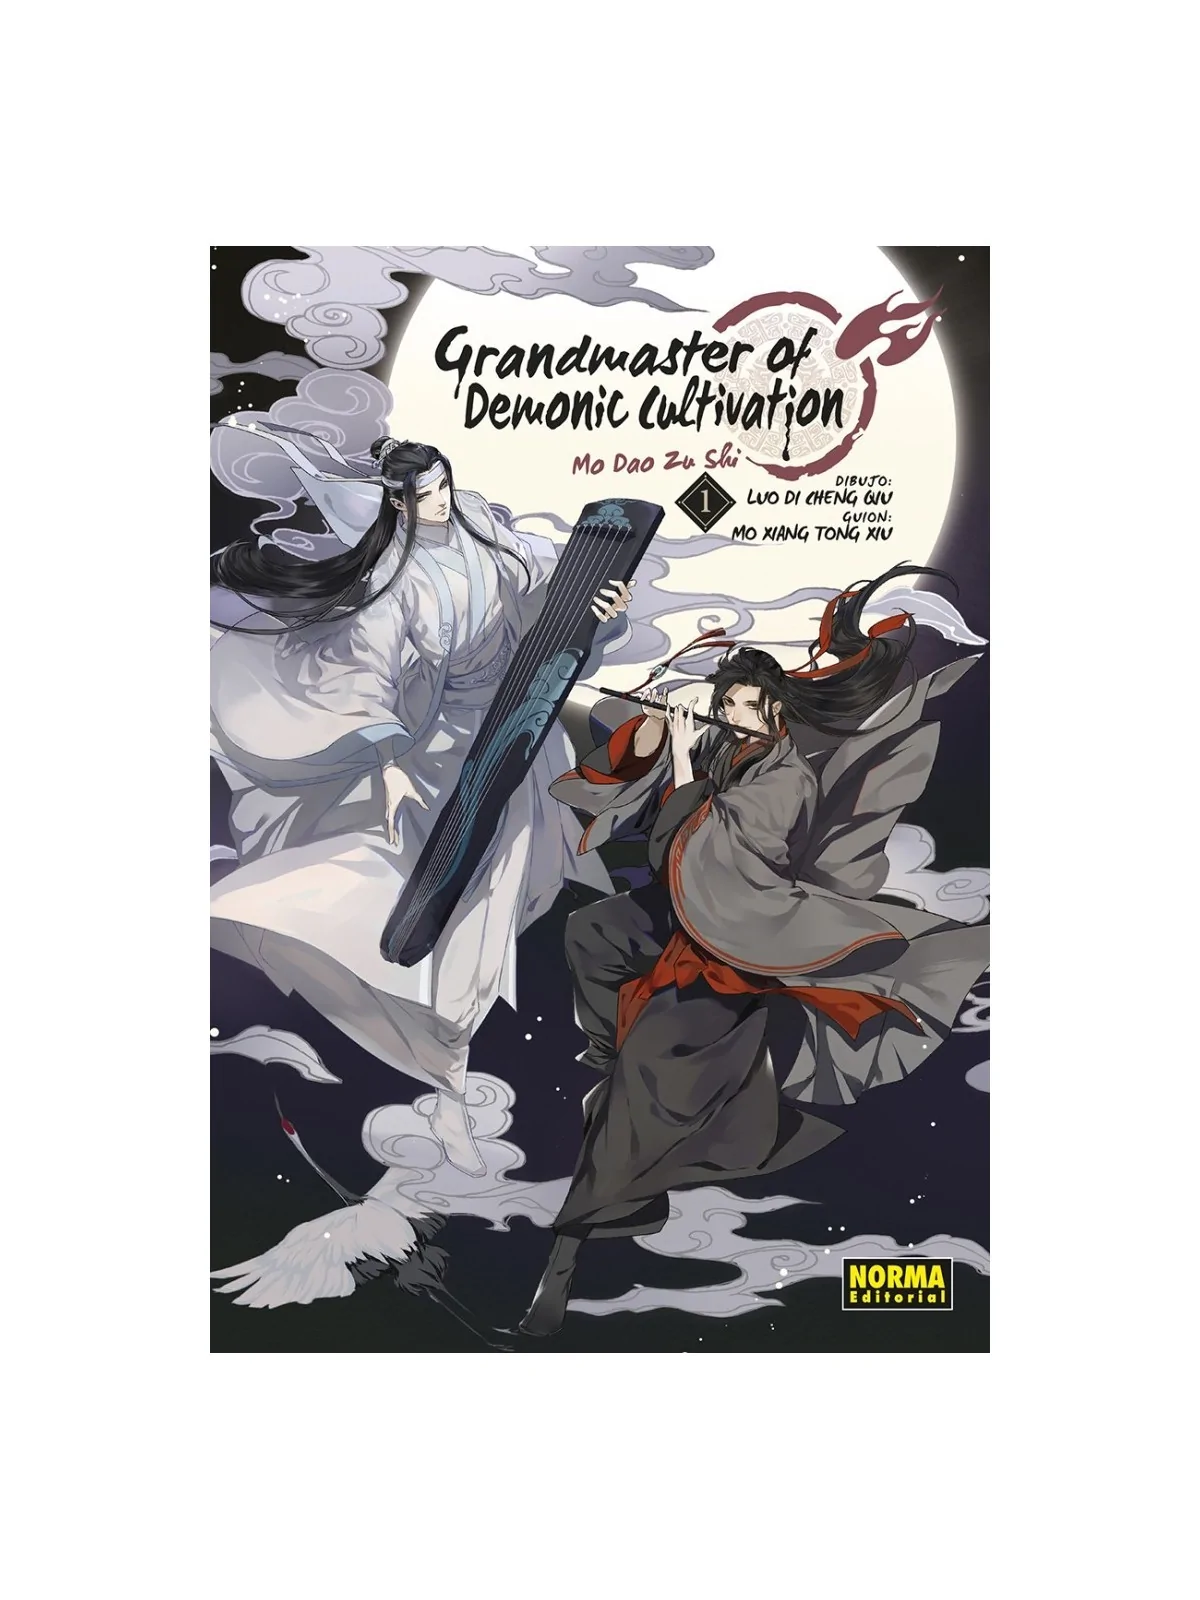 Comprar Grandmaster of Demonic Cultivation 01 (Mo dao zu shi) barato a